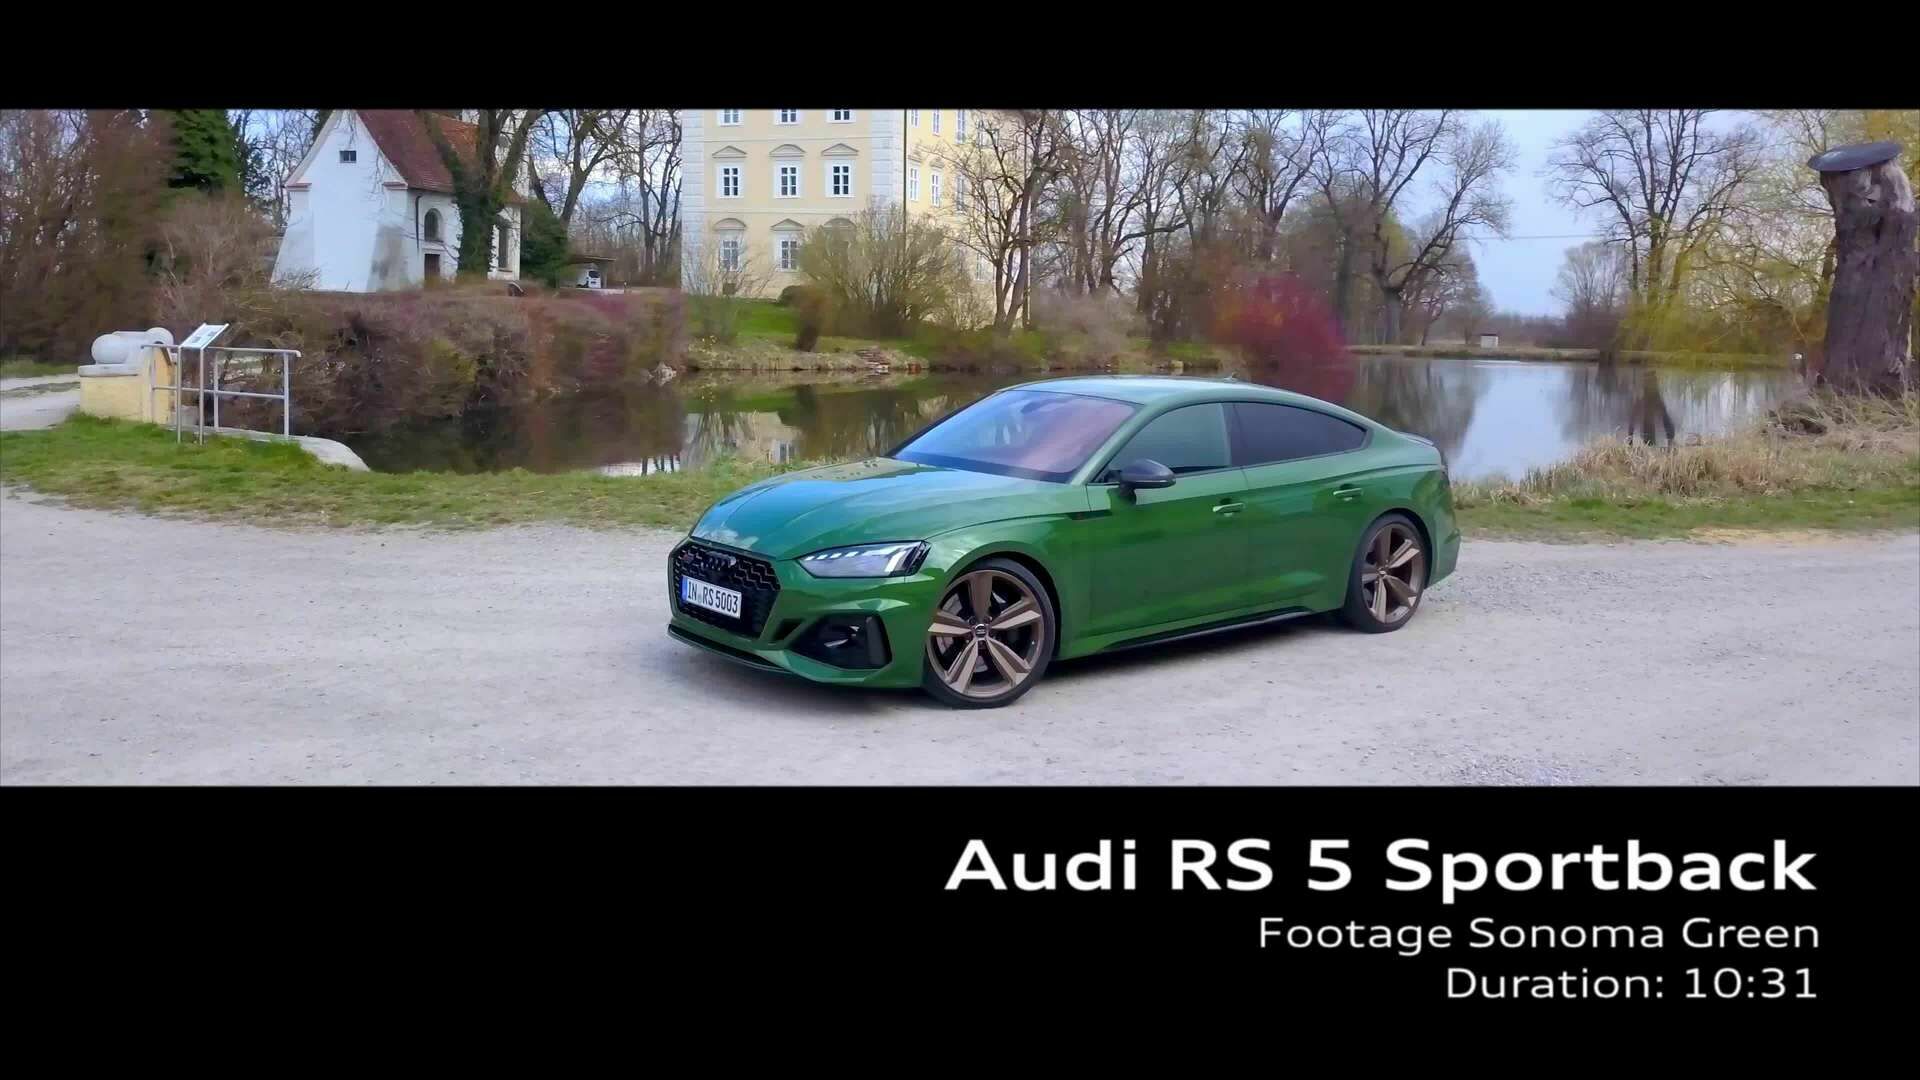 Footage: Audi RS 5 Sportback Sonomagrün